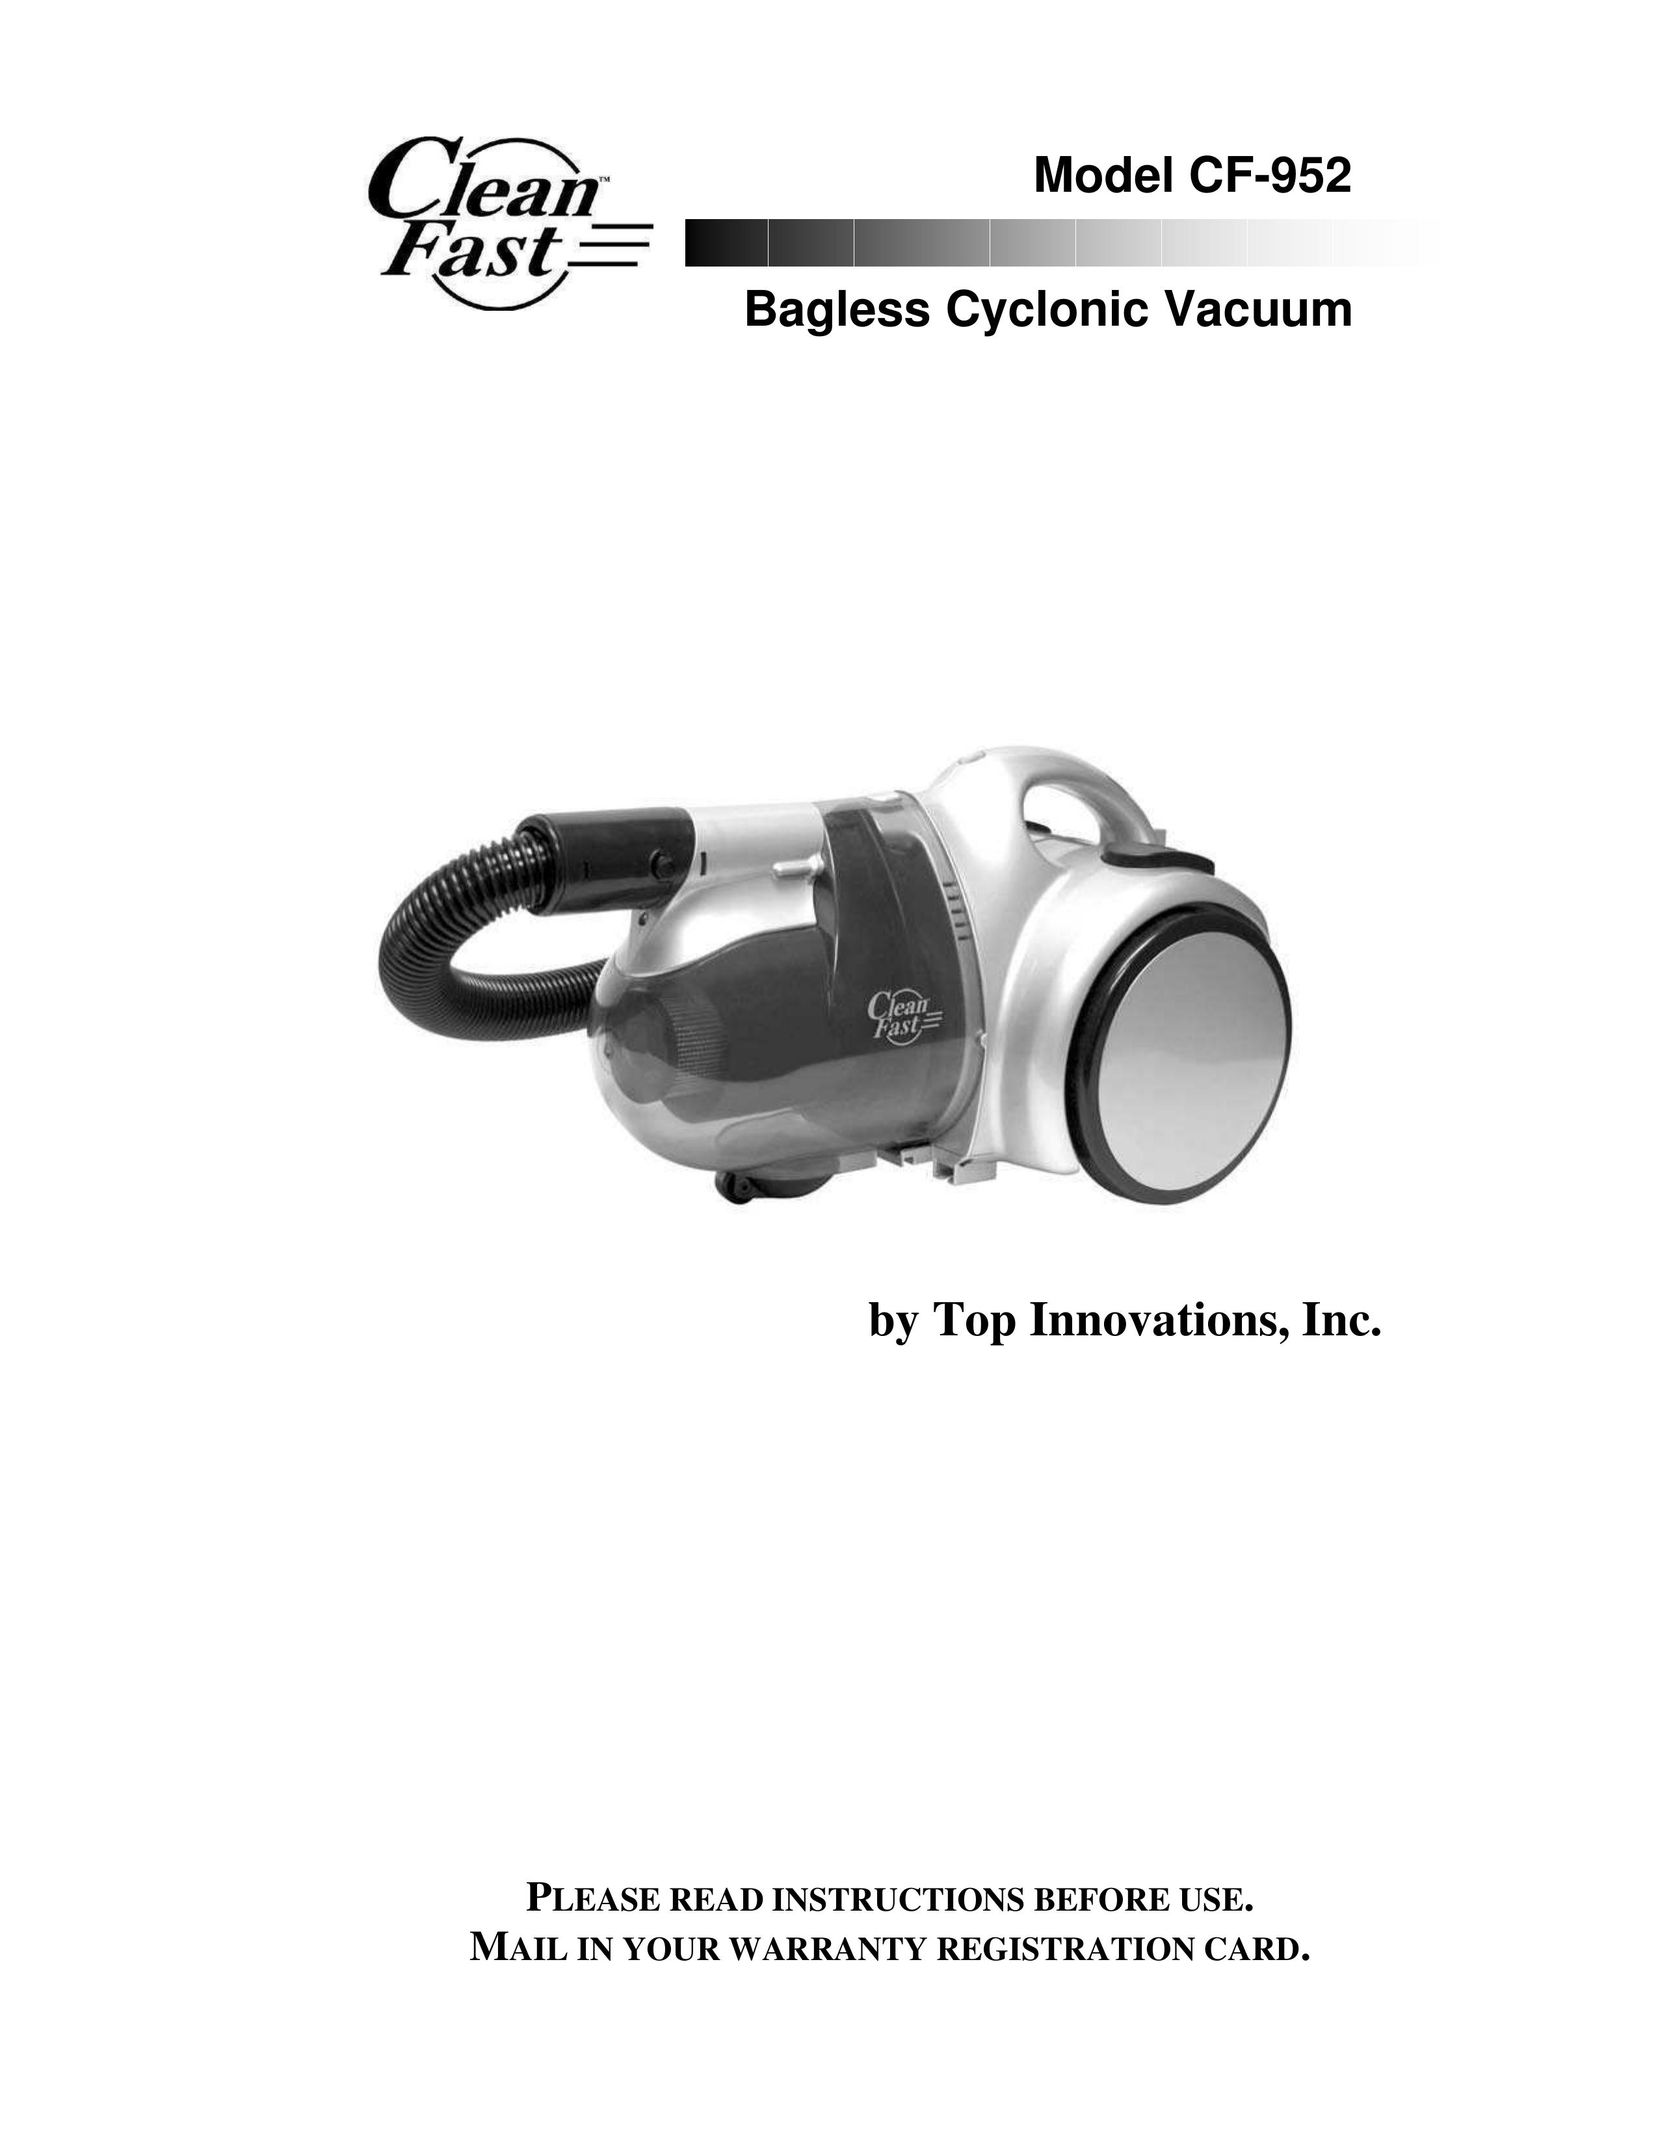 Top Innovations CF-952 Vacuum Cleaner User Manual